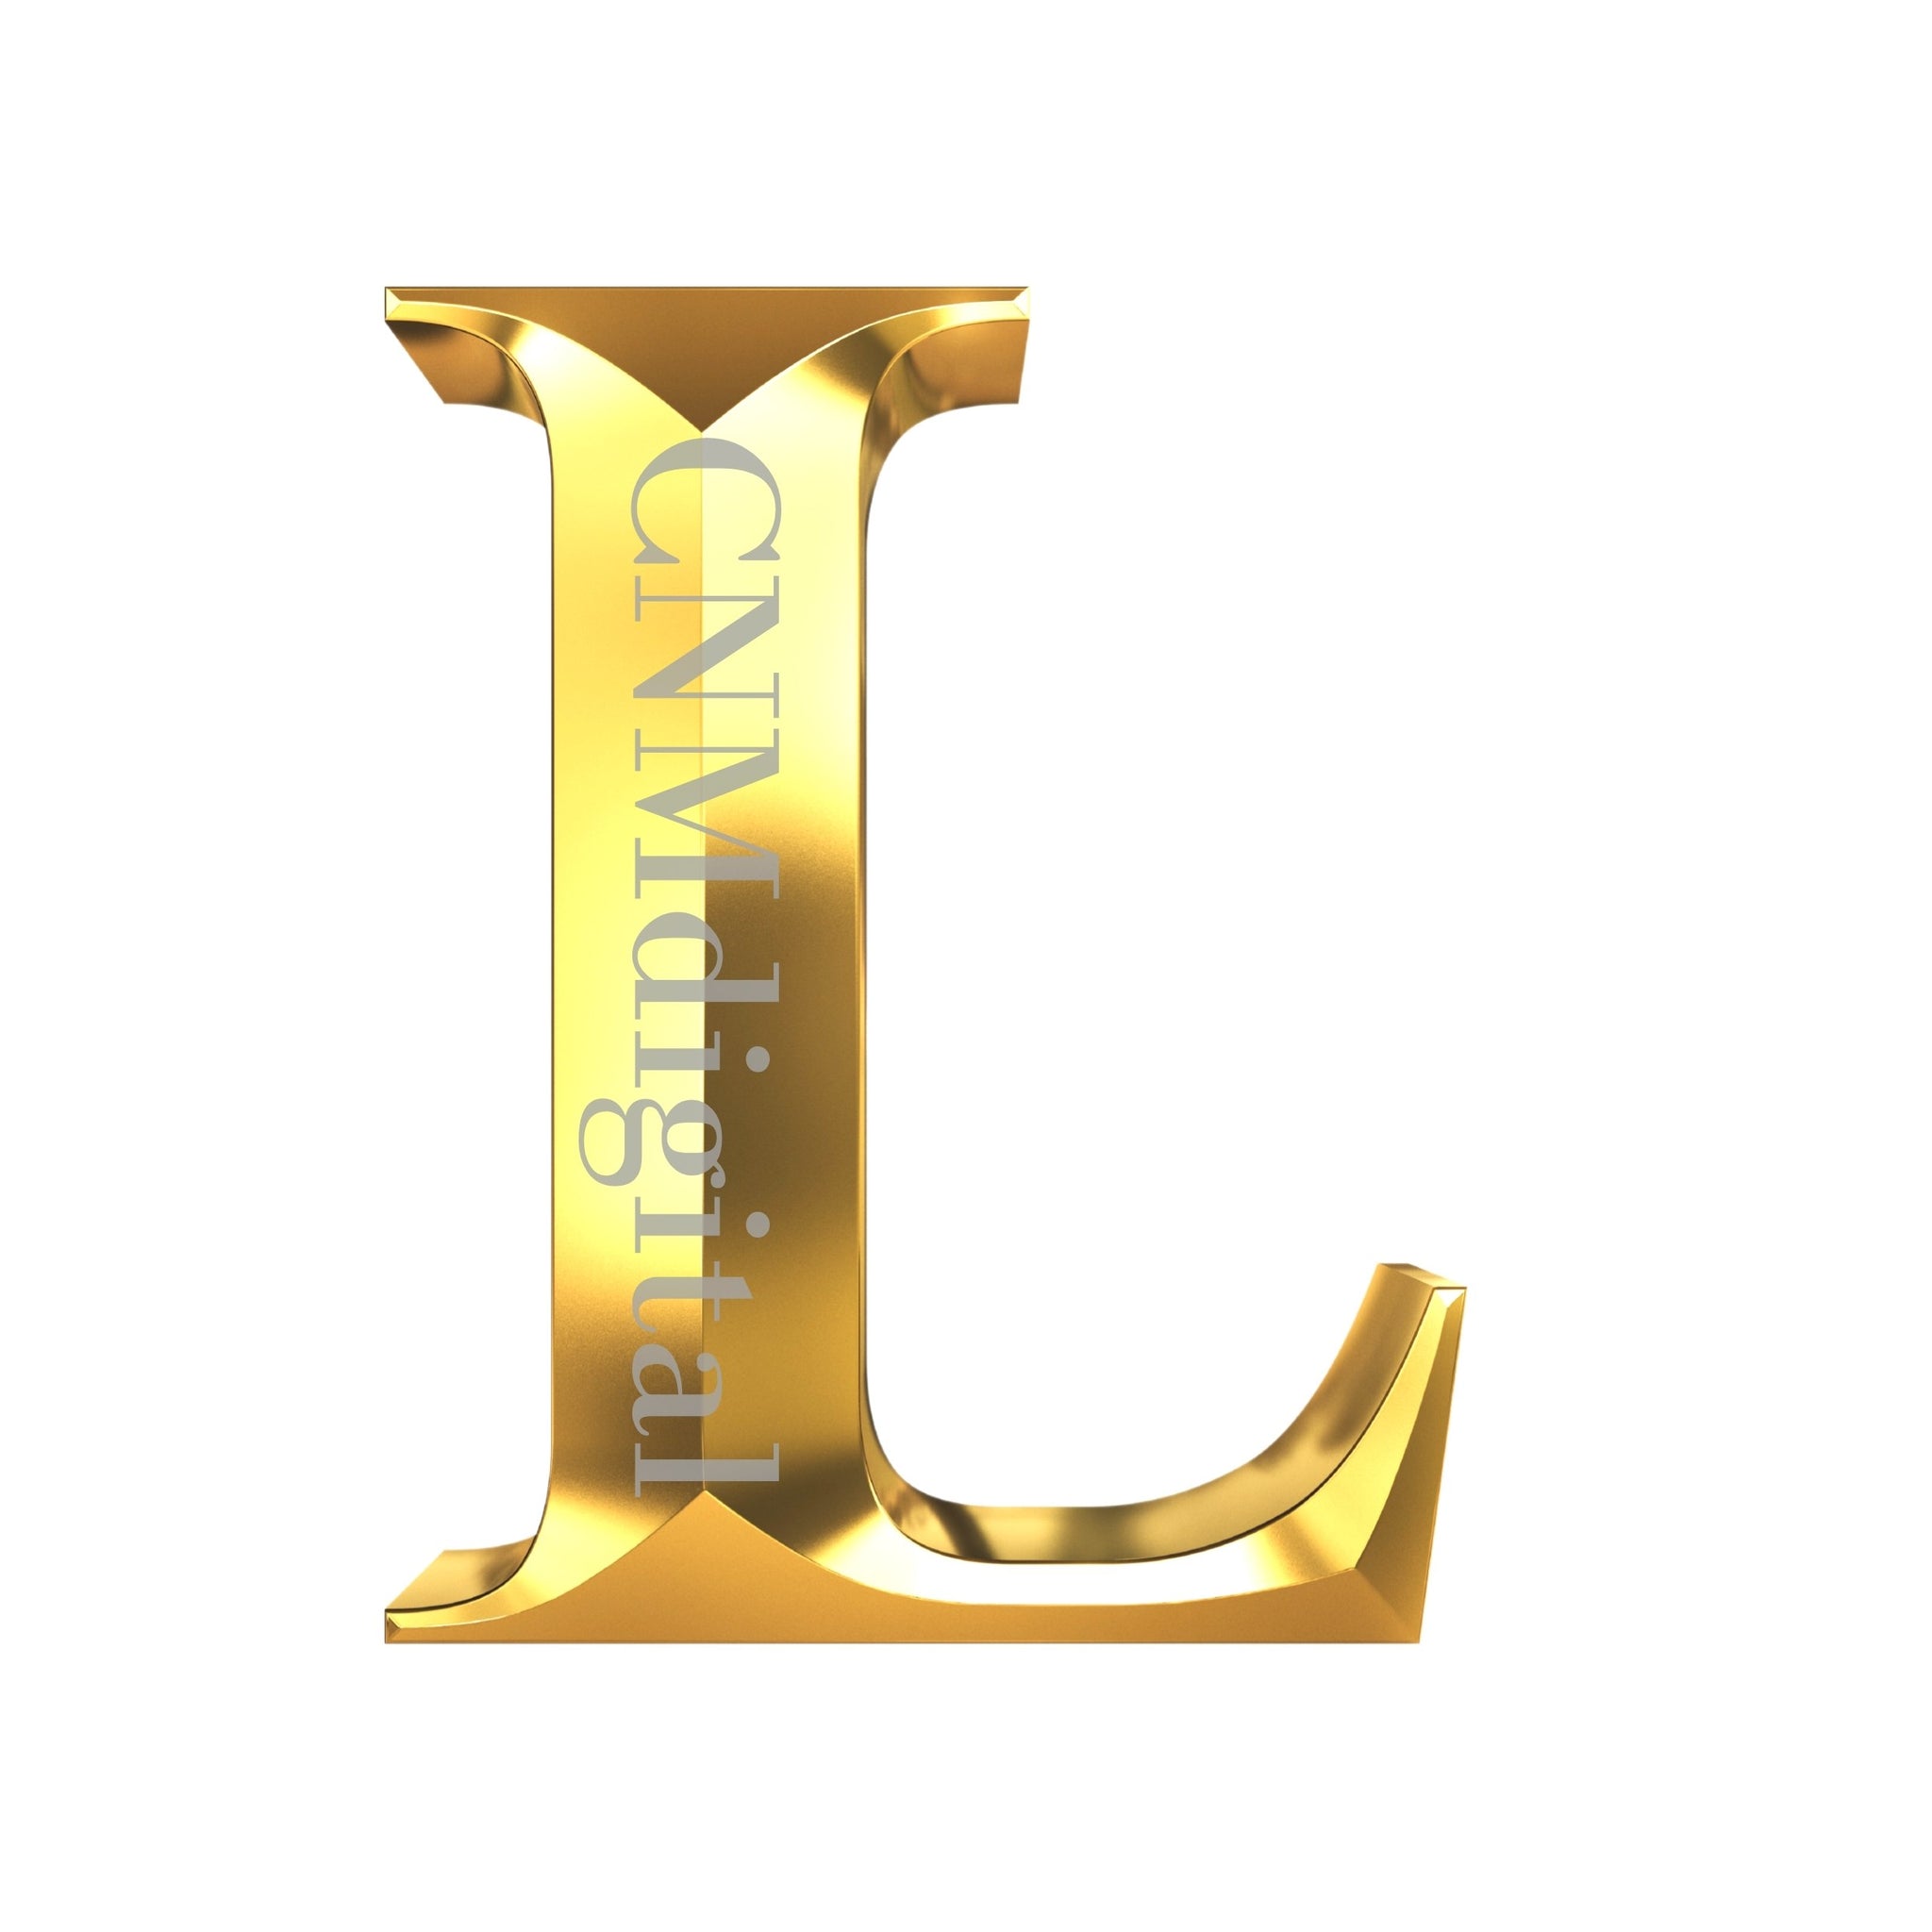 Gold letters, English alphabet, Instant Download, Digital file, clipart, Transparent, L-letter, PNG graphics, clipart letters,